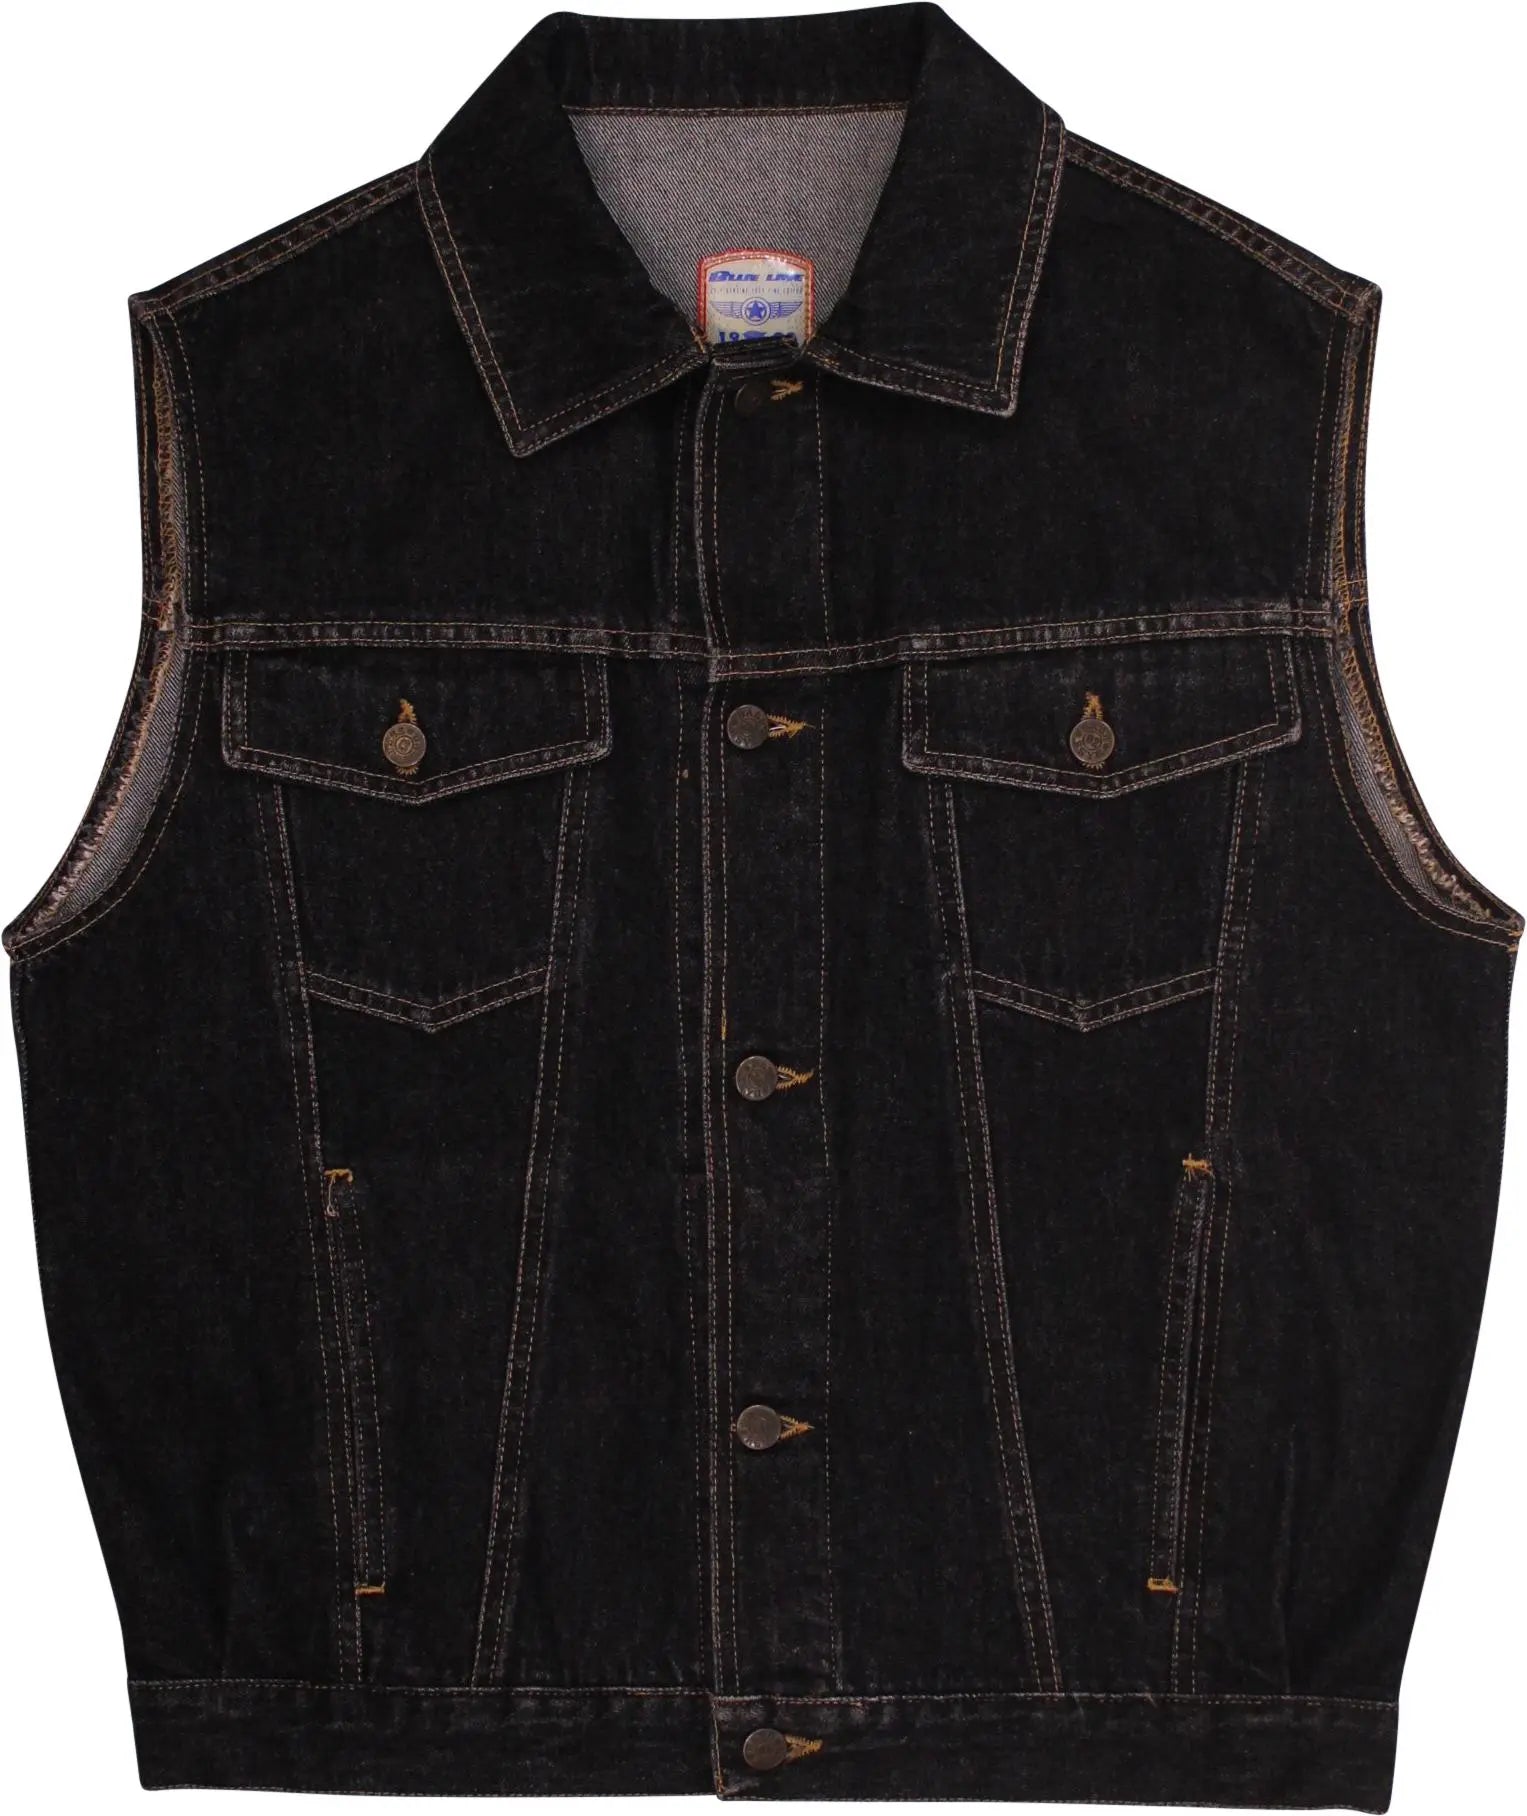 Blue Line - Vintage Sleeveless Denim Jacket- ThriftTale.com - Vintage and second handclothing